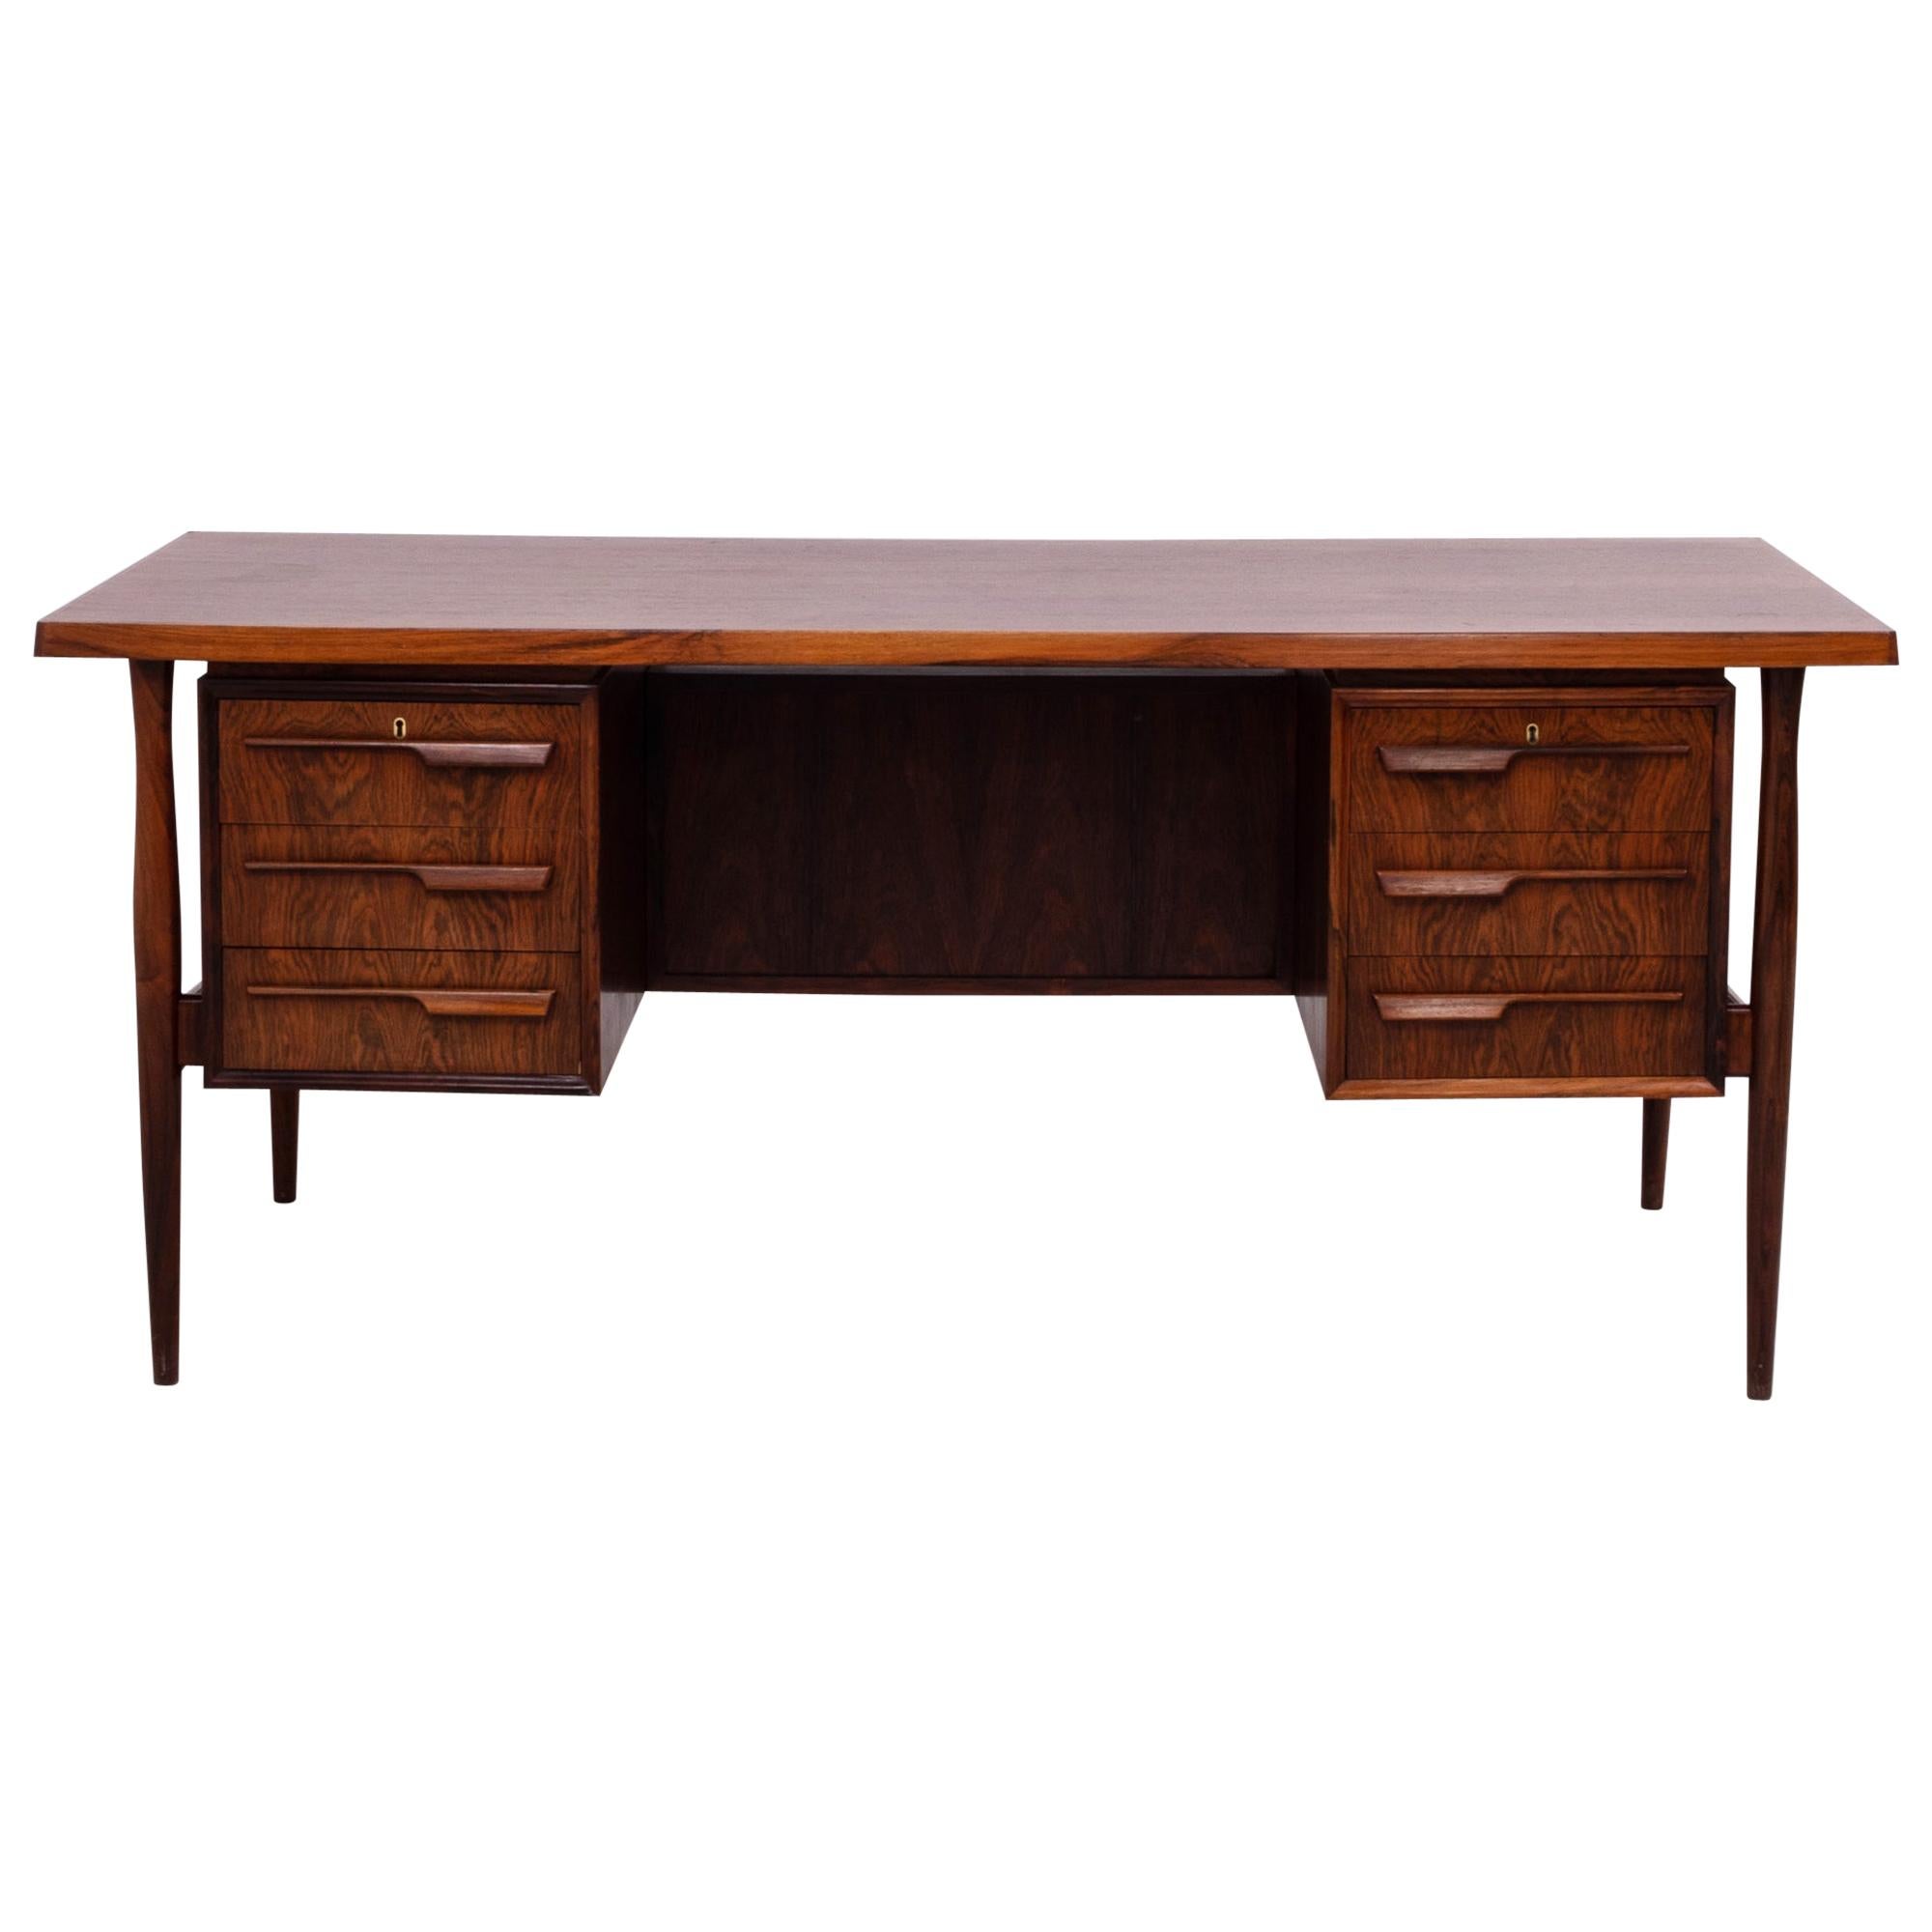 Midcentury Modern Brown Rosewood Desk, 20th Century, c 1960s, lockable drawers